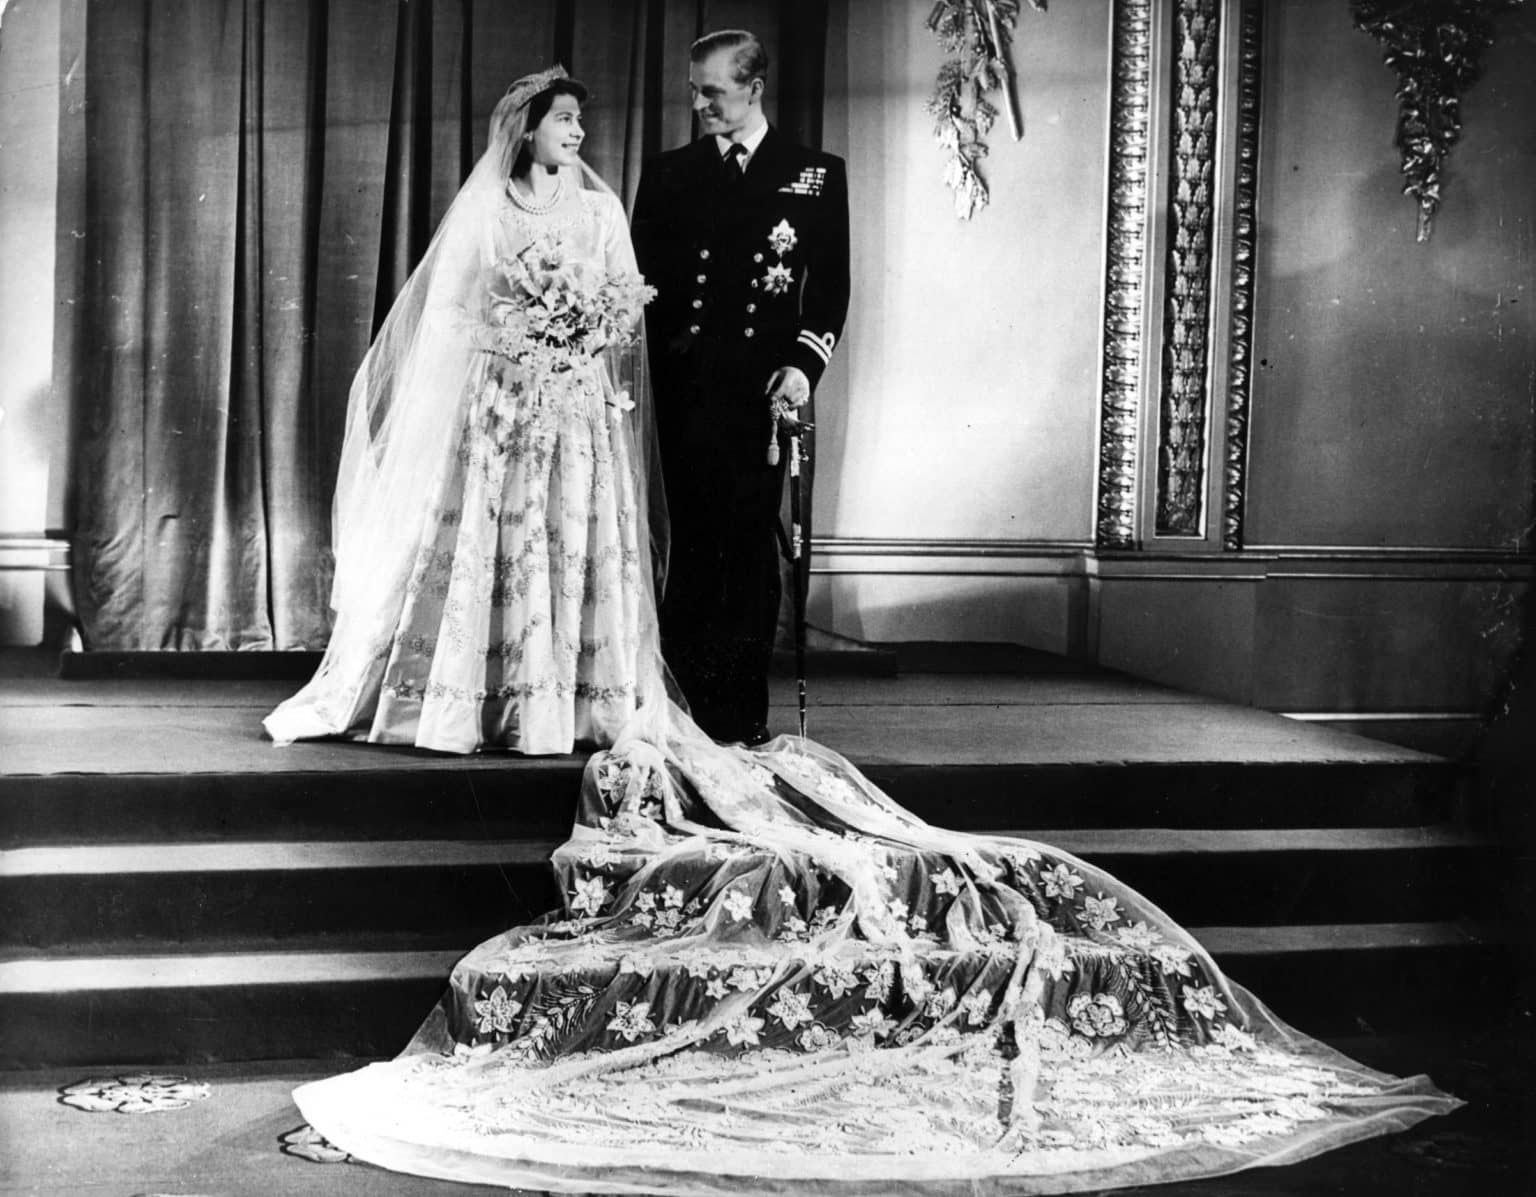 Queen Elizabeth II's Ceremonial Wedding Dress and Robes Designed by